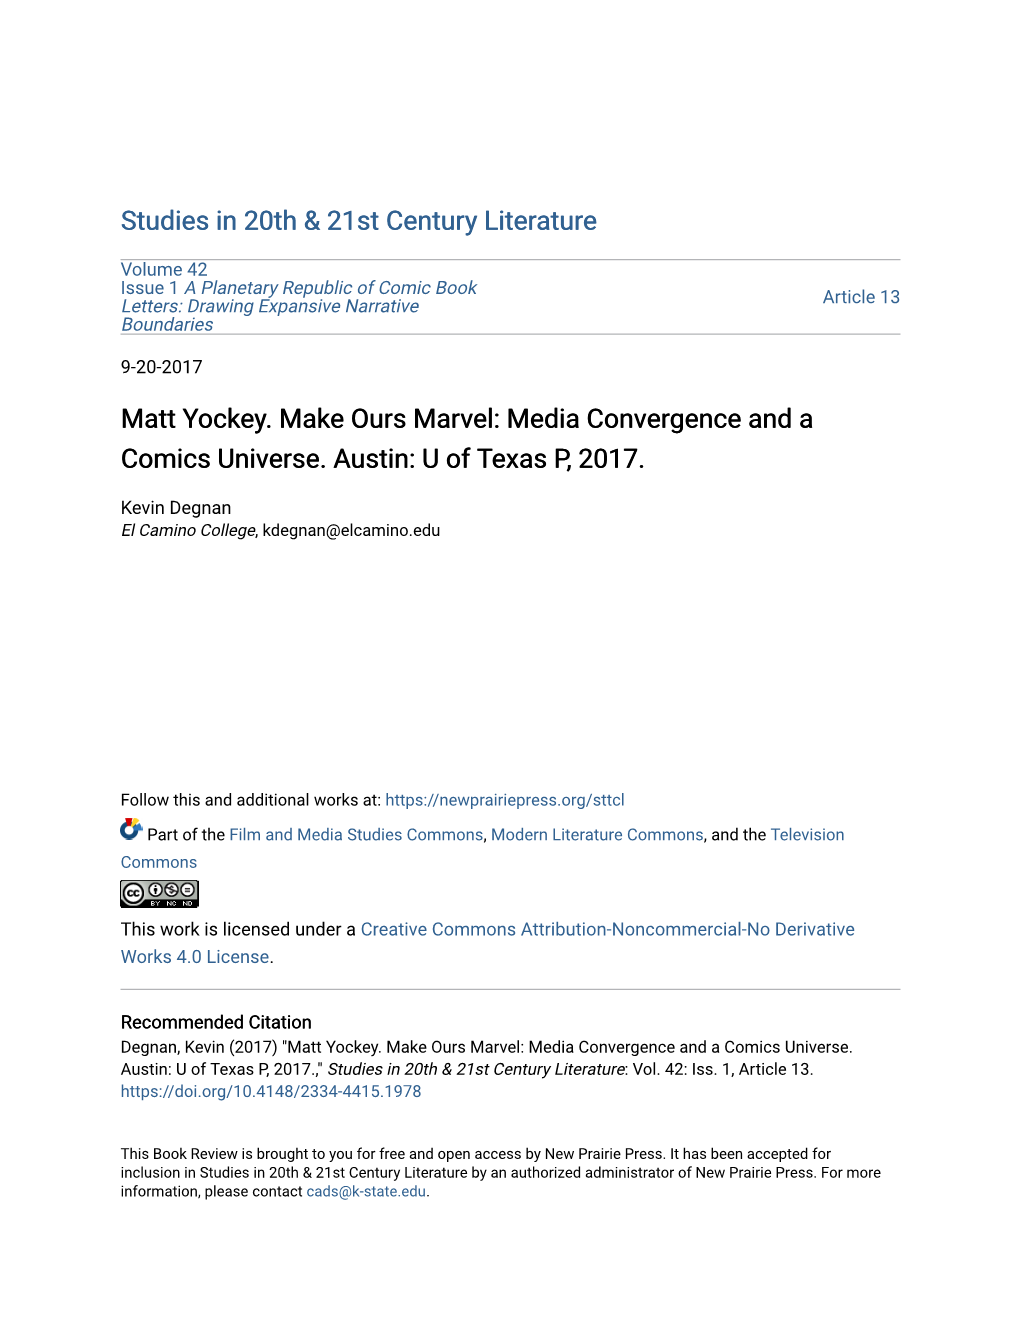 Media Convergence and a Comics Universe. Austin: U of Texas P, 2017